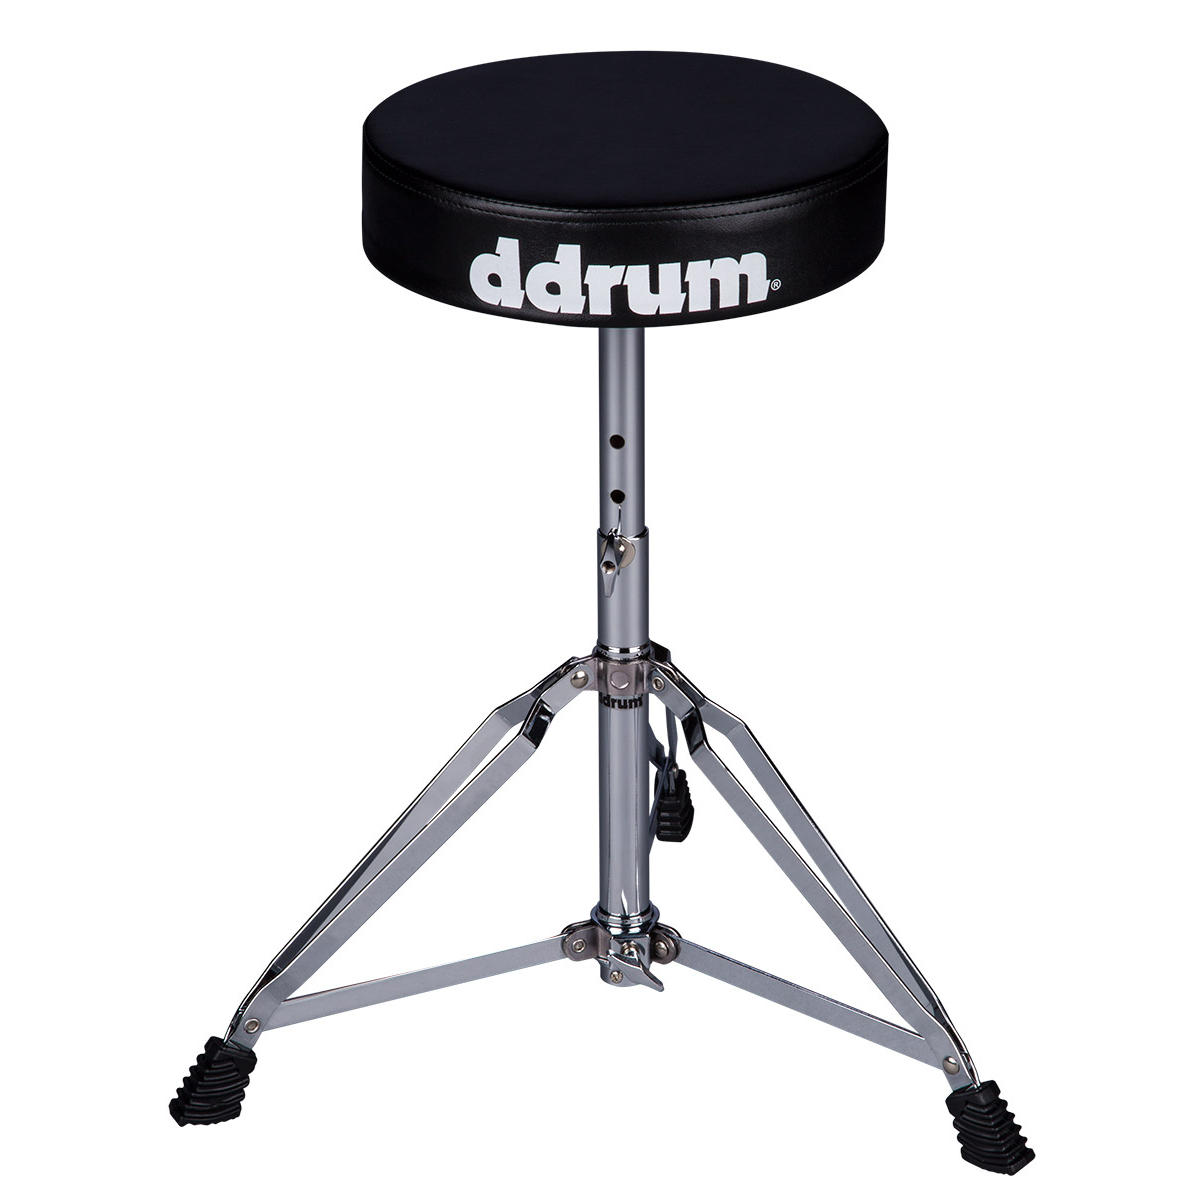 DDRUM RXDT - стул для барабанщика купить в prostore.me